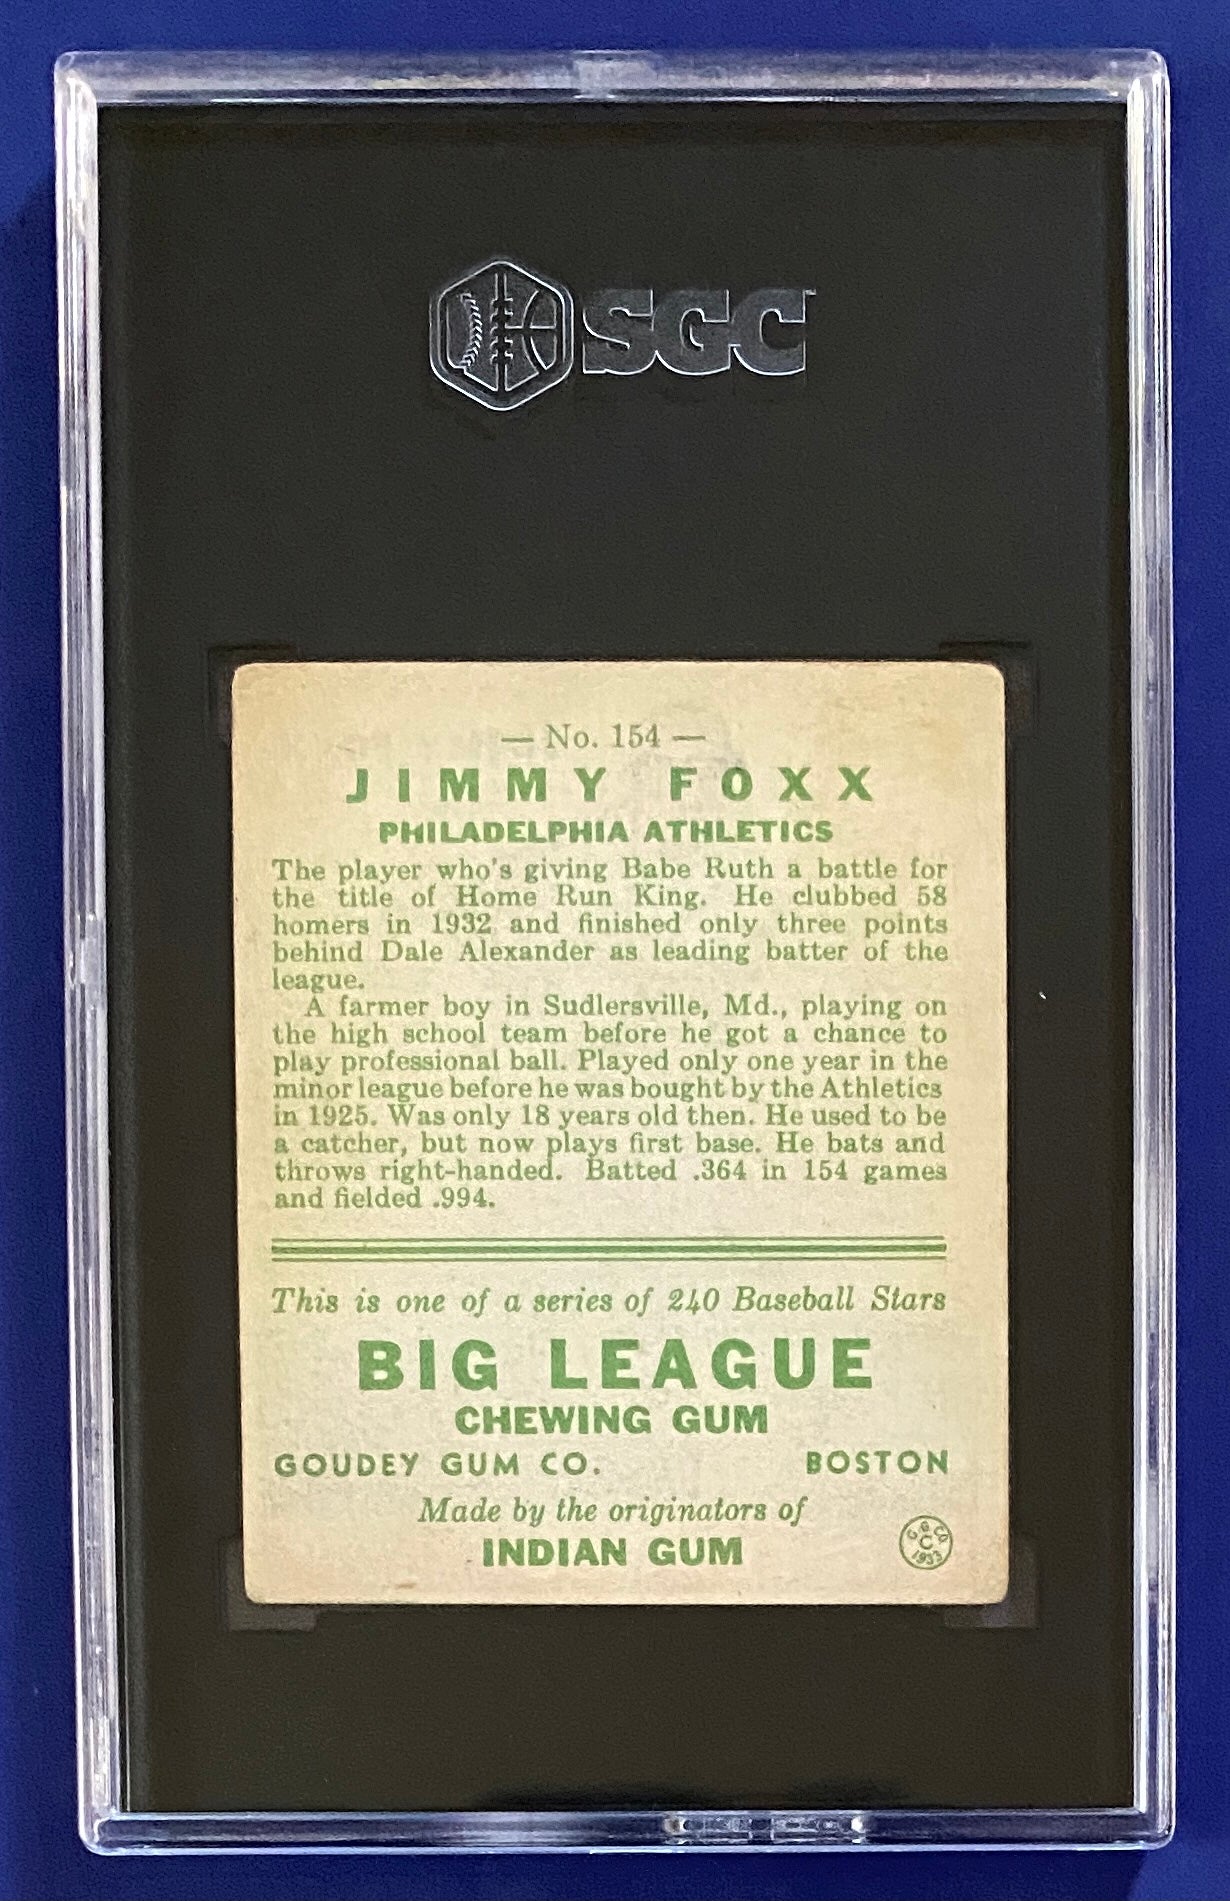 Jimmy Foxx RC 1933 Goudey #154 SGC 4